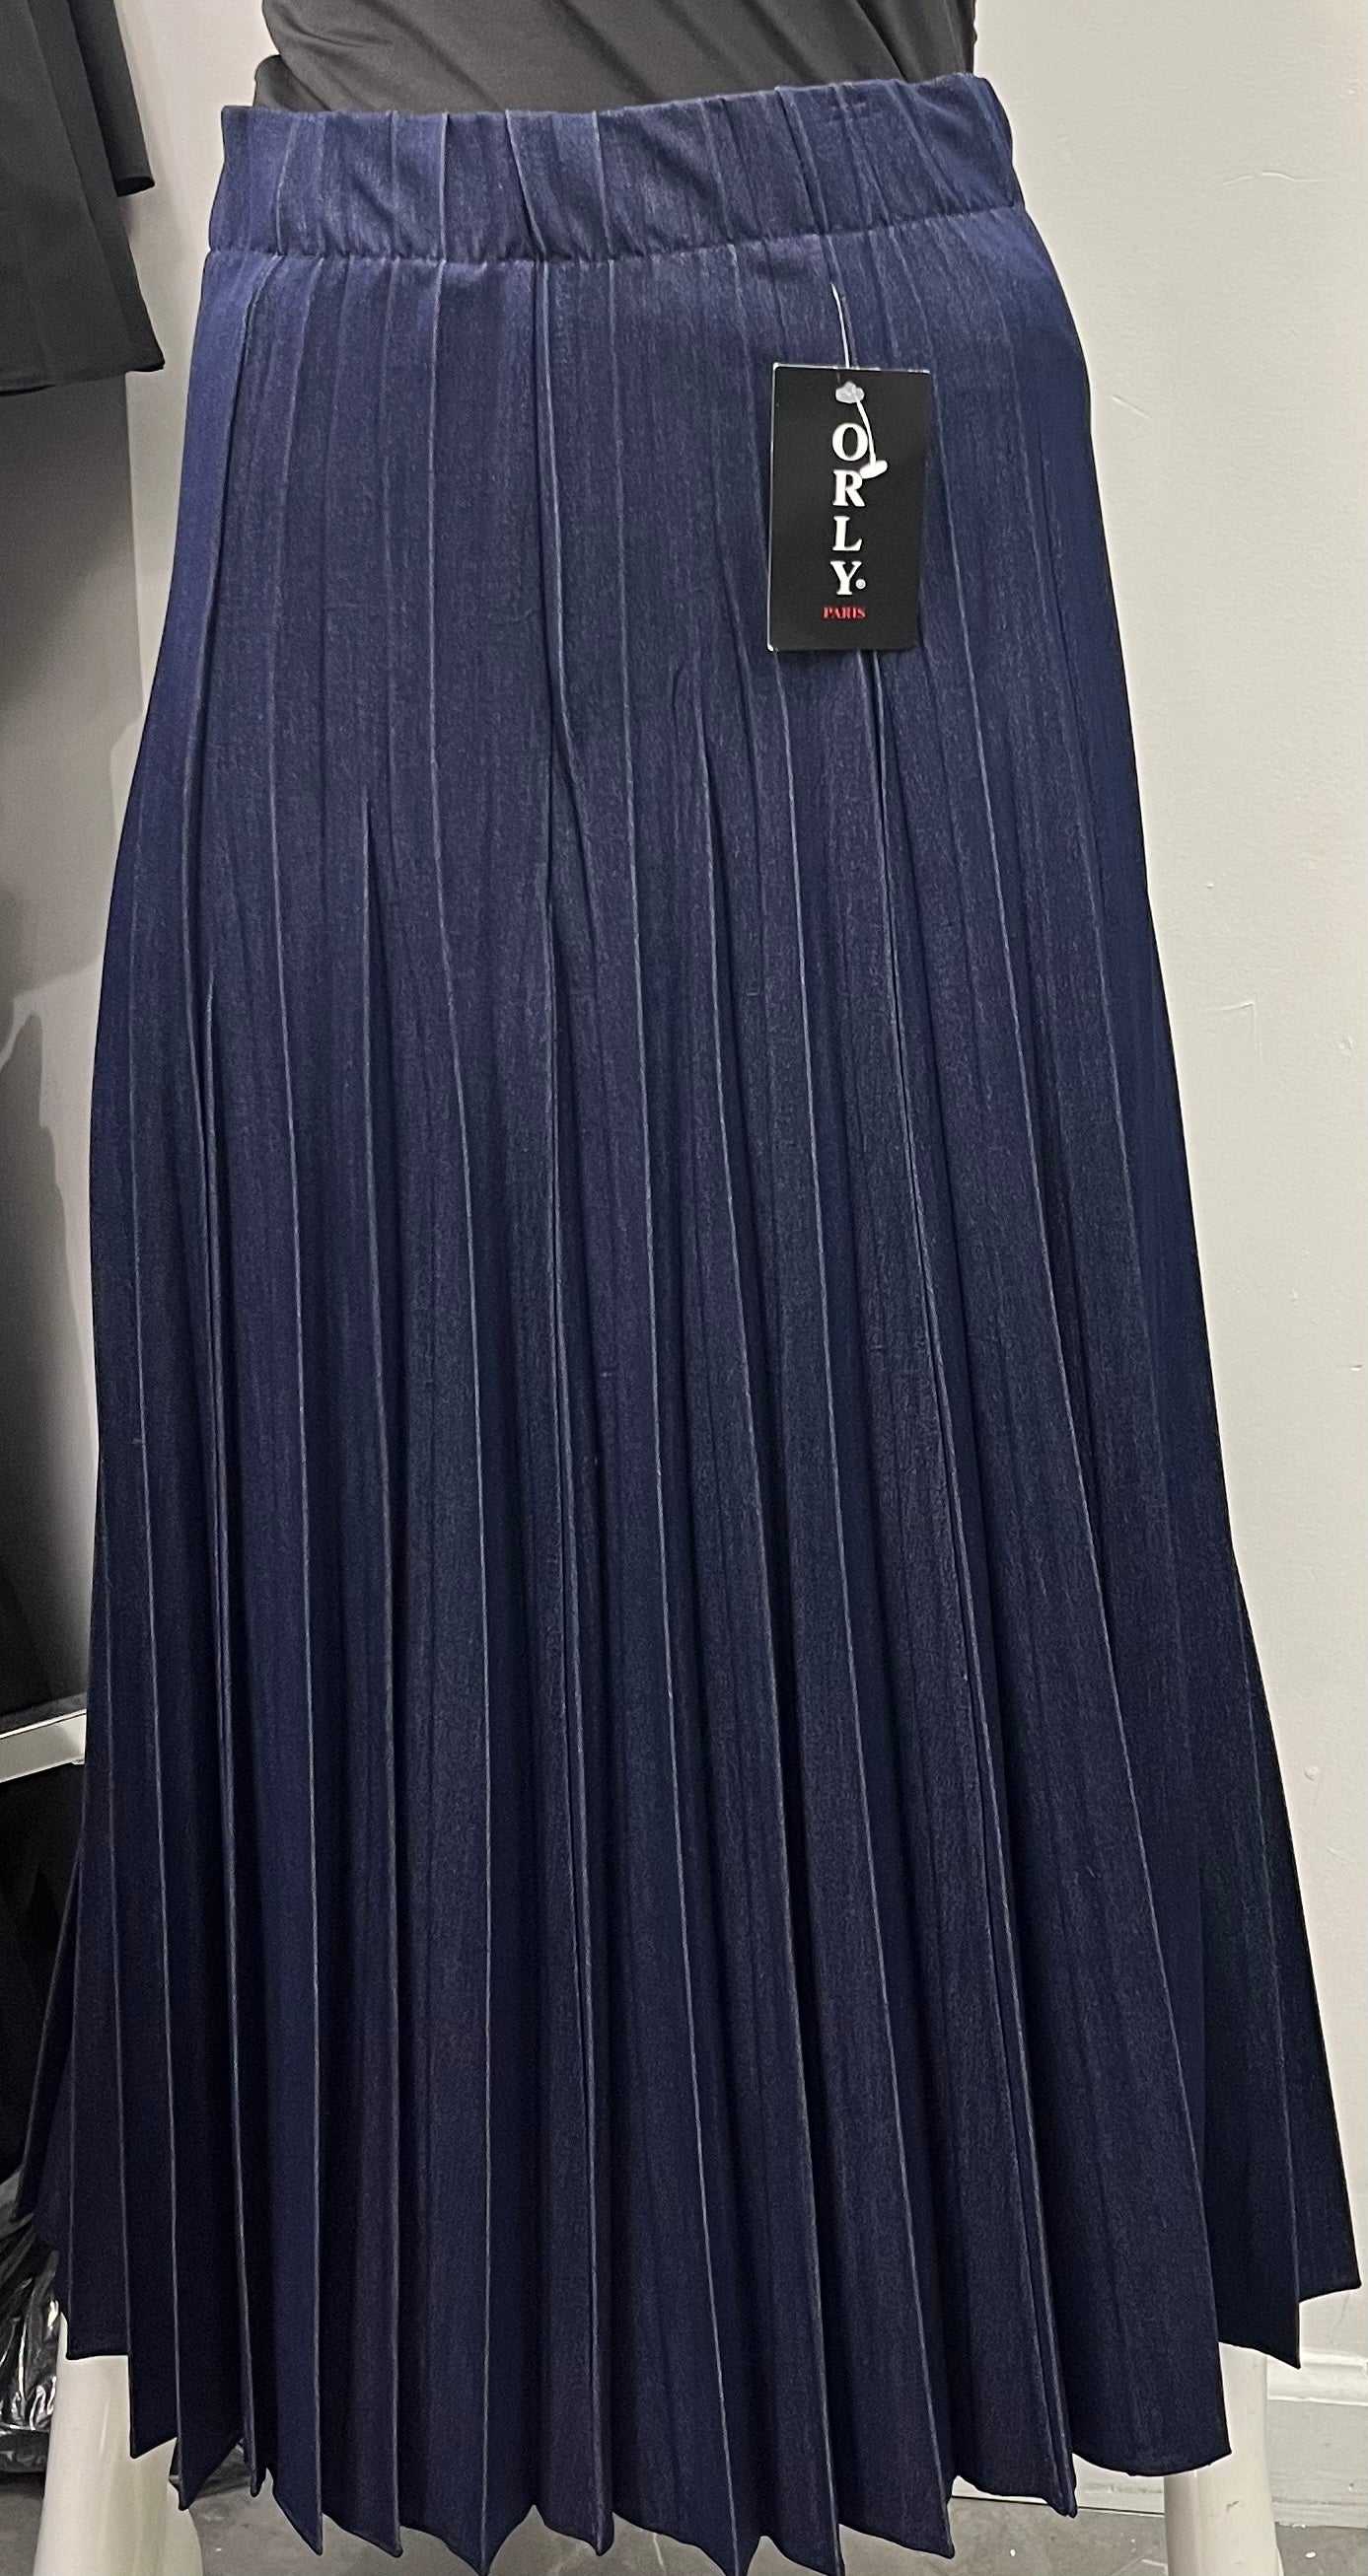 Denim dungaree skirt Color blue - SINSAY - VF662-55J